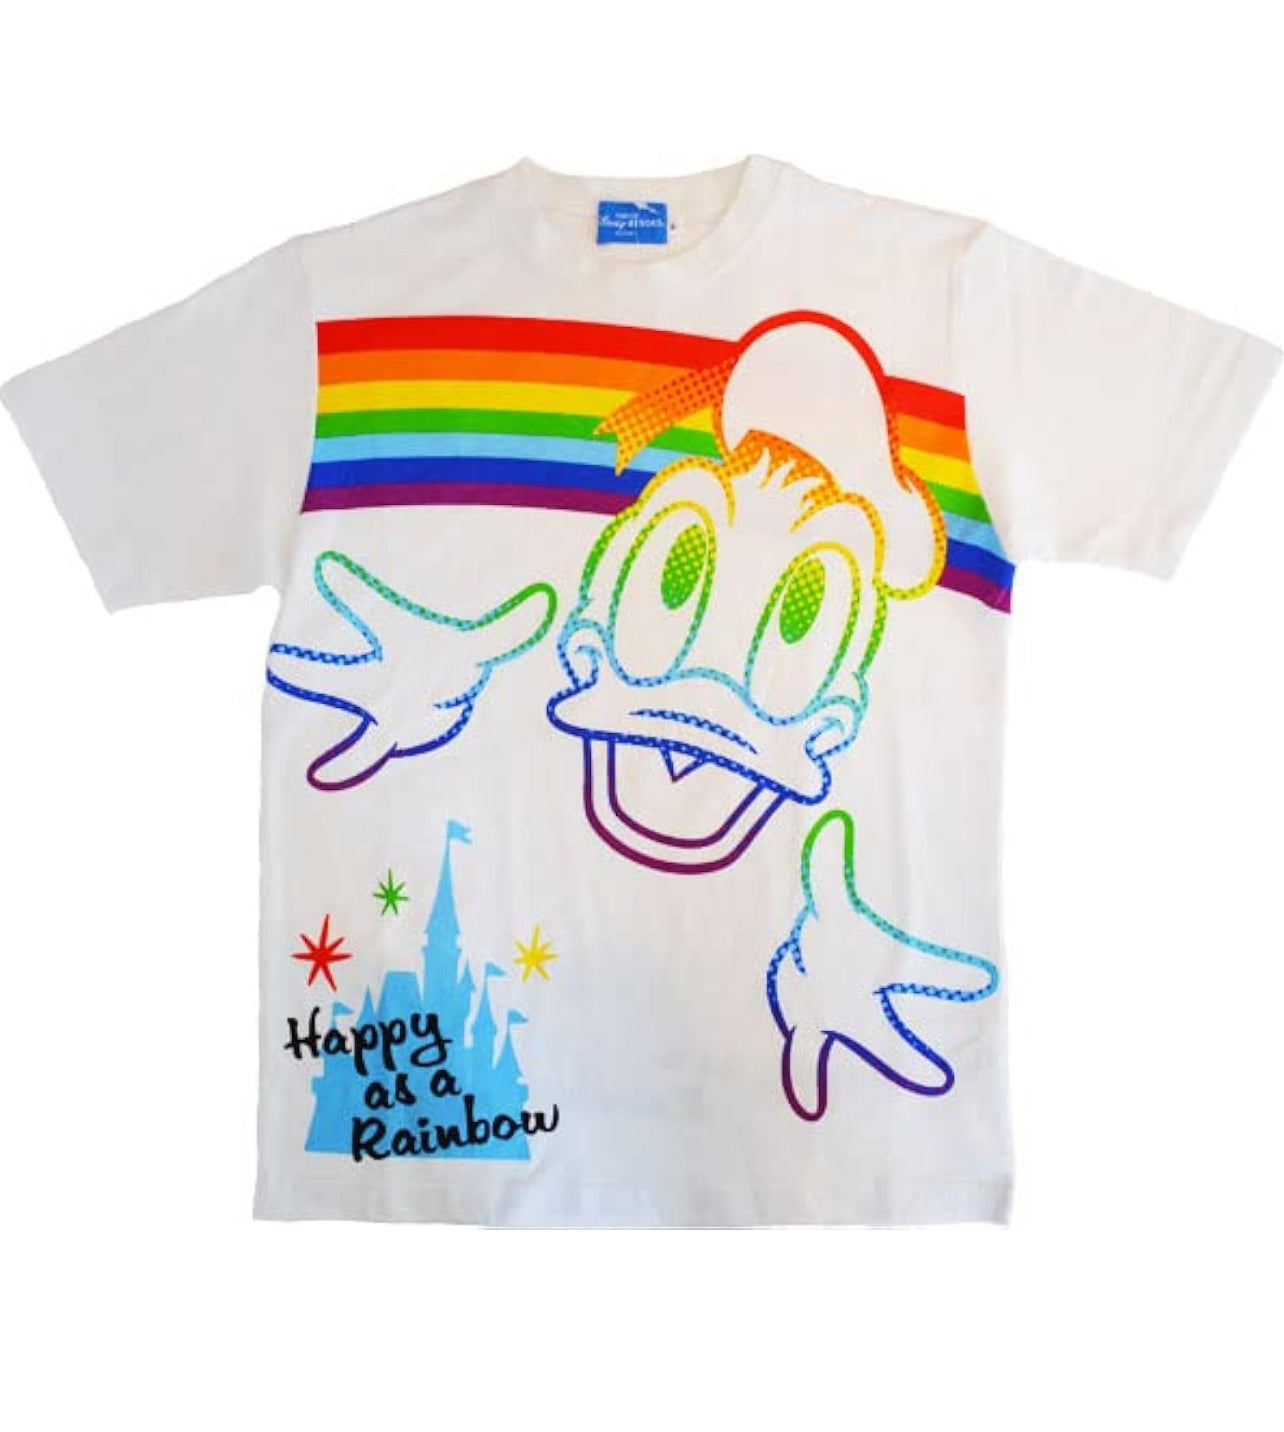 Tokyo Disney happy as a rainbow t-shirt